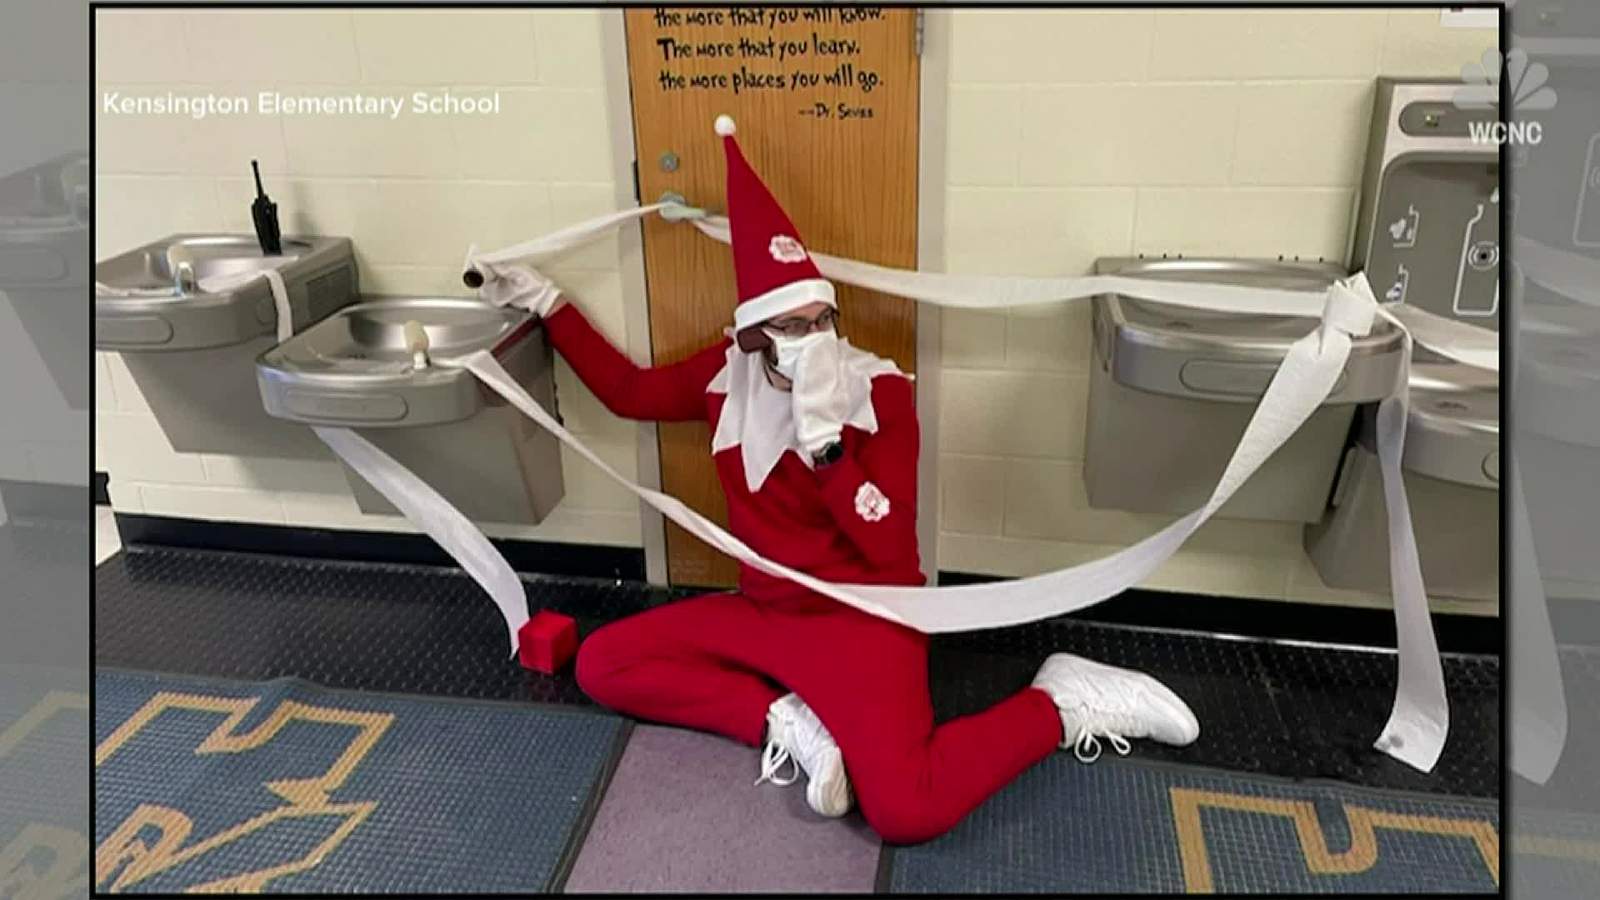 Elementary school principal transforms into mischievous elf to lift students’ spirits